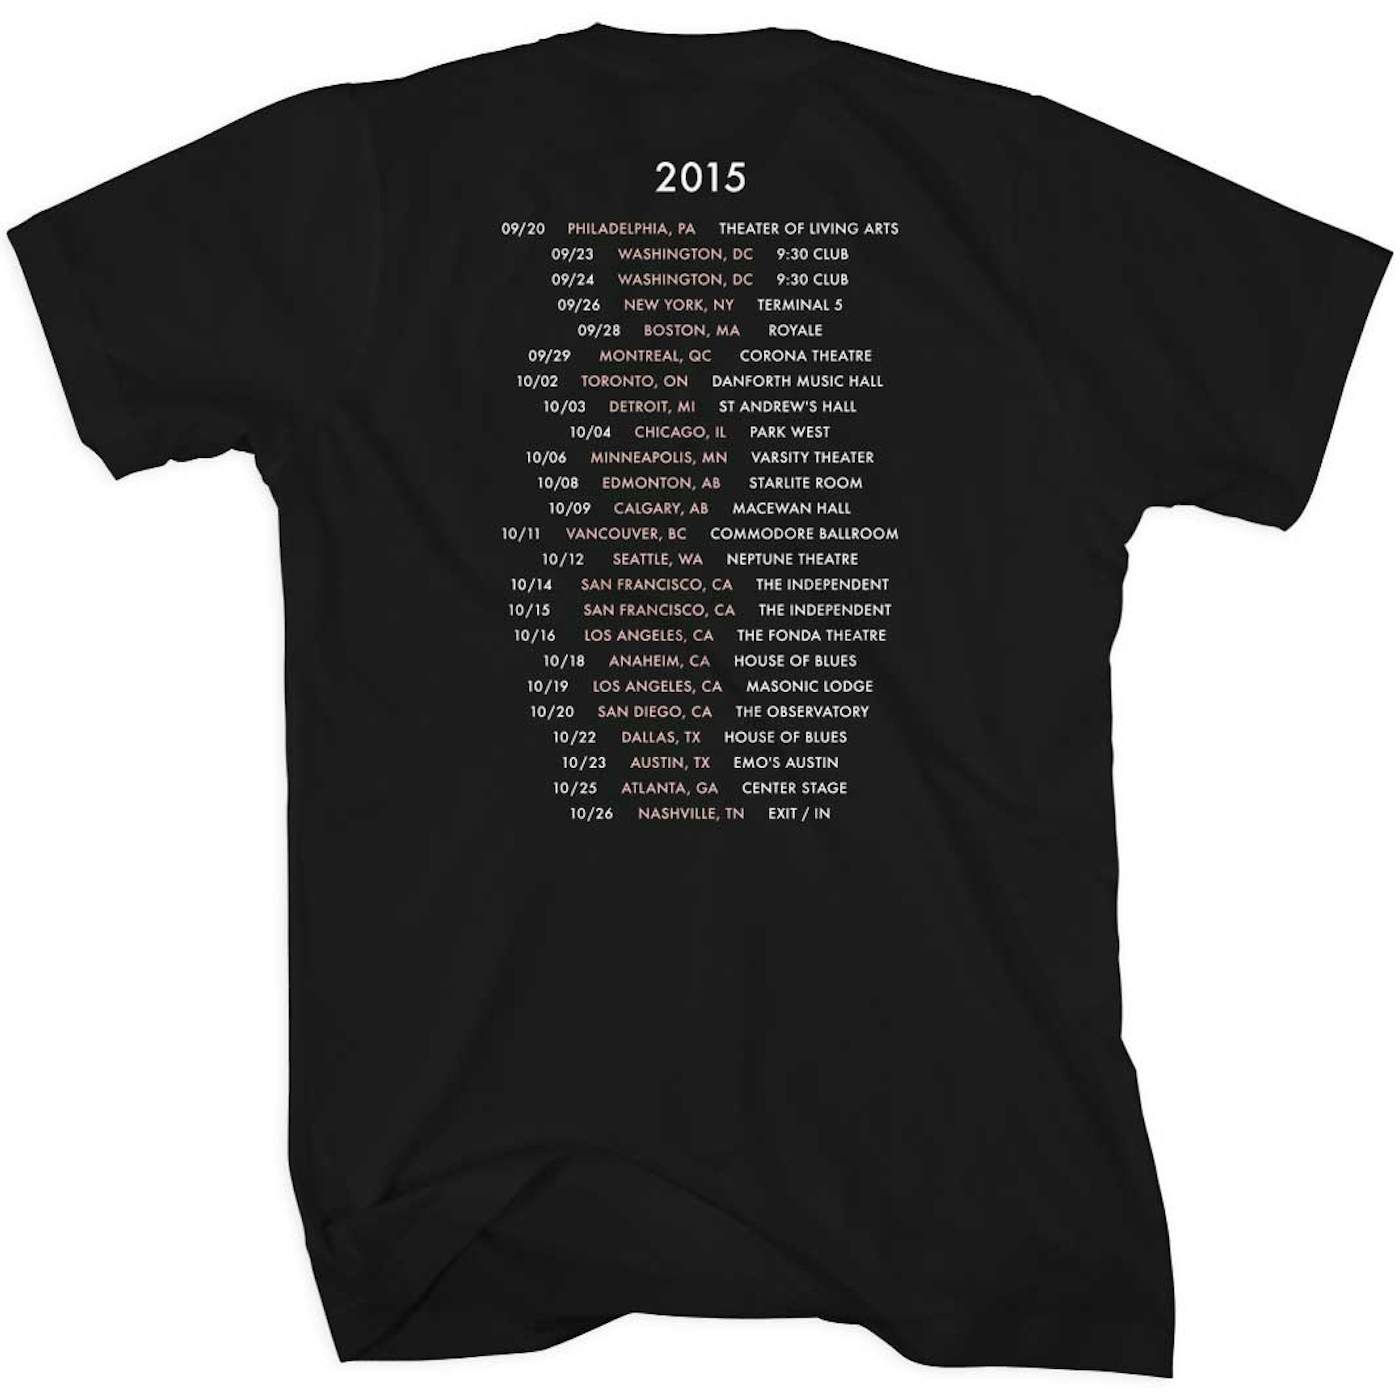 Lianne La Havas Logo 2015 Tour T-Shirt Black